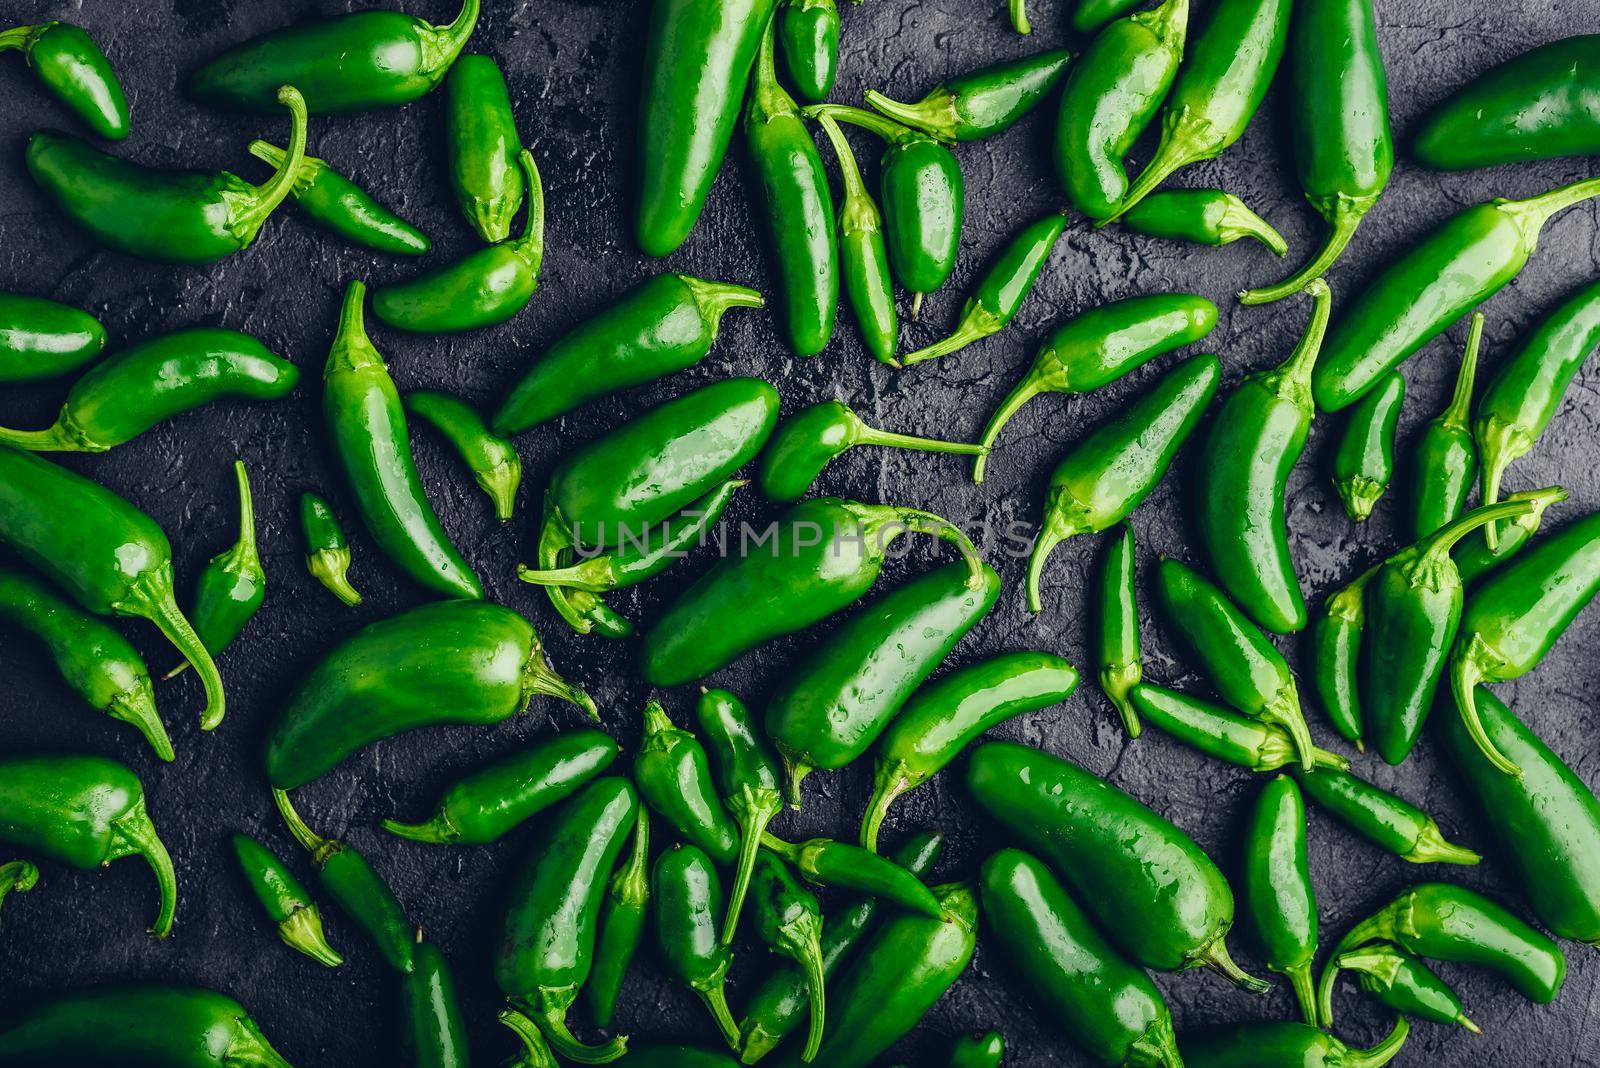 Green Jalapeno Peppers by Seva_blsv